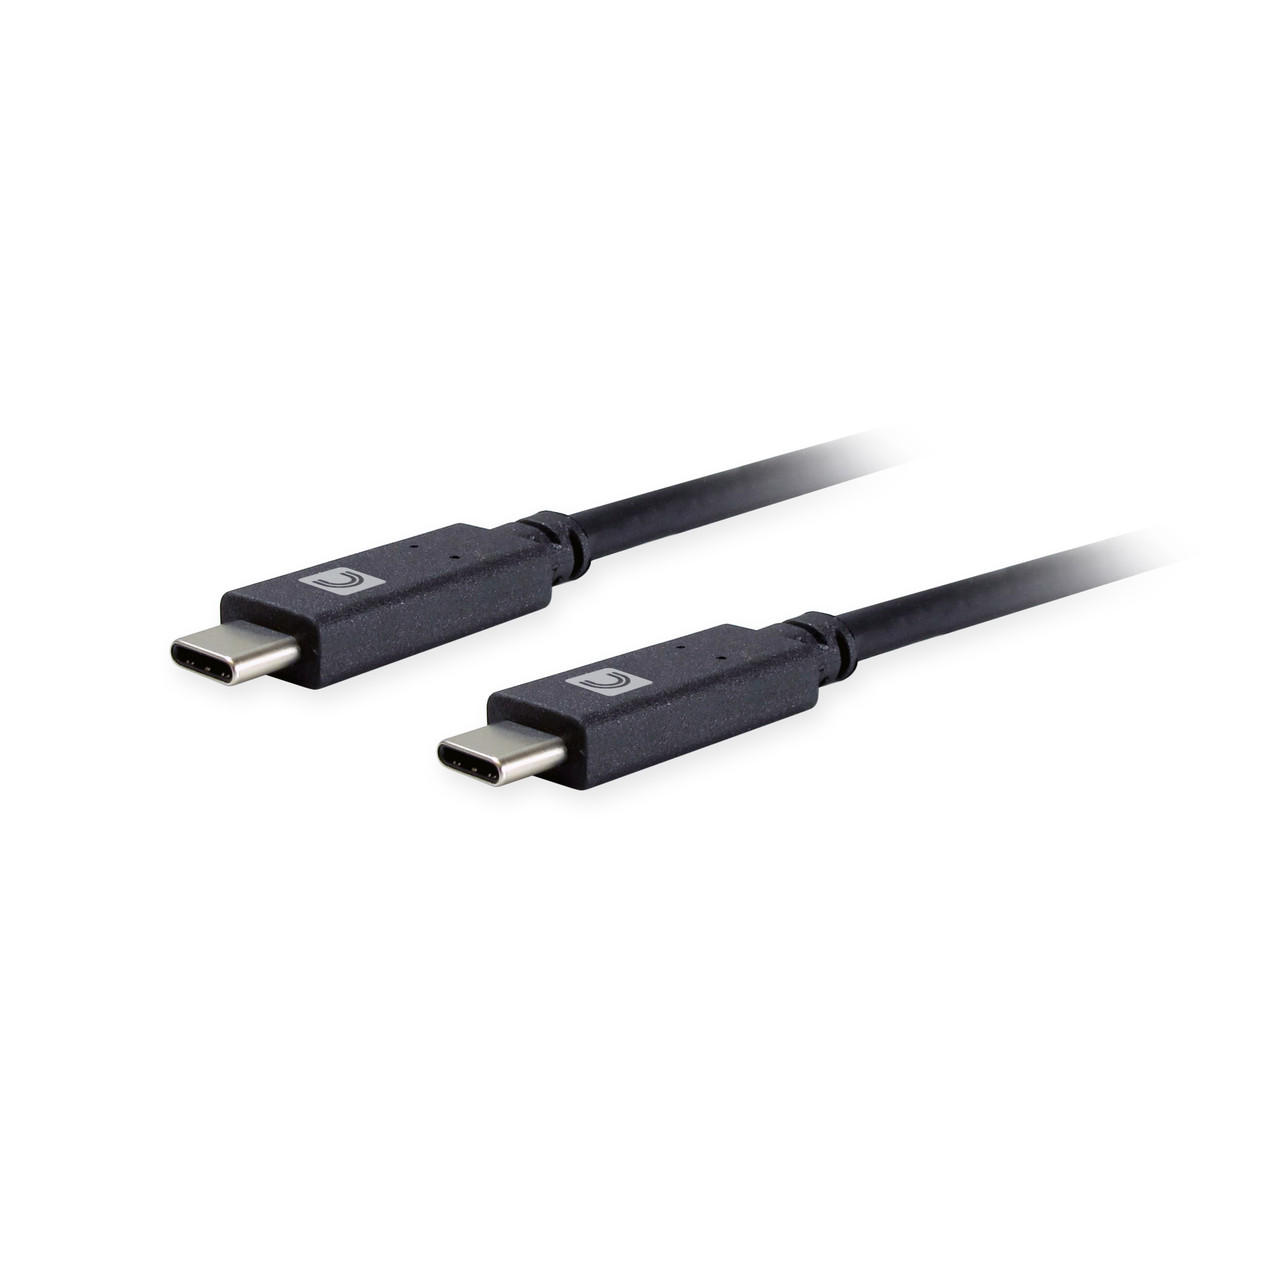 USB-C to USB-A Cable, USB 3.1 Gen 1, Thunderbolt